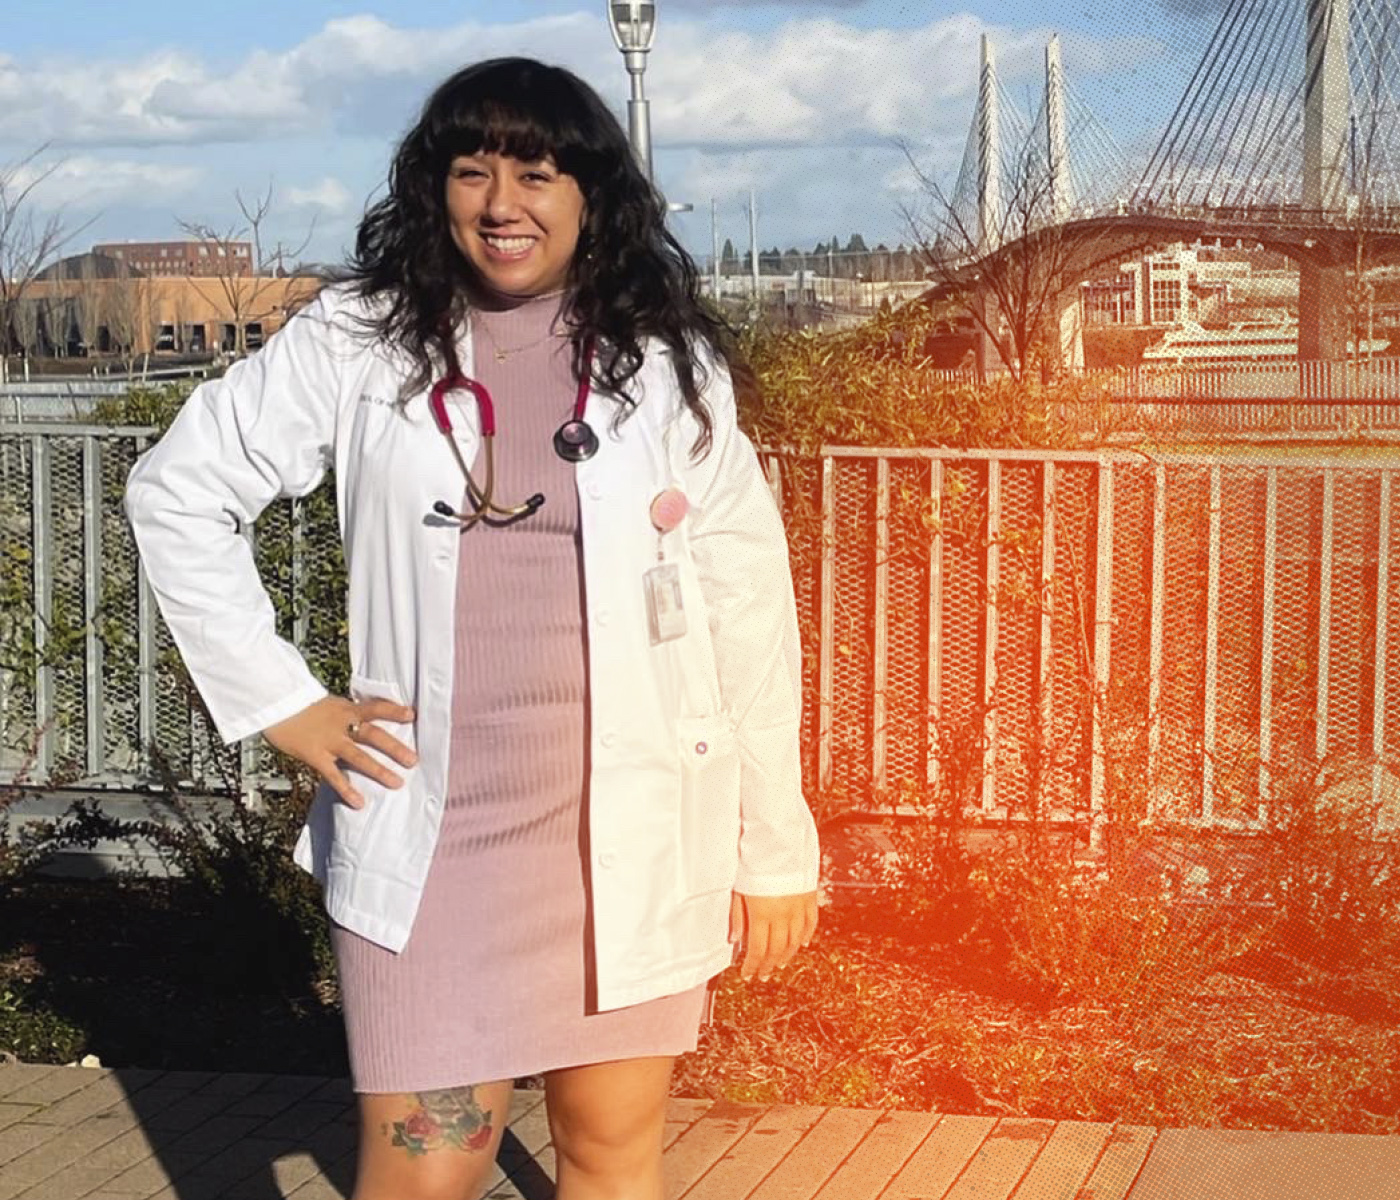 Medical student in her white coat stands by Tillicum Bridge